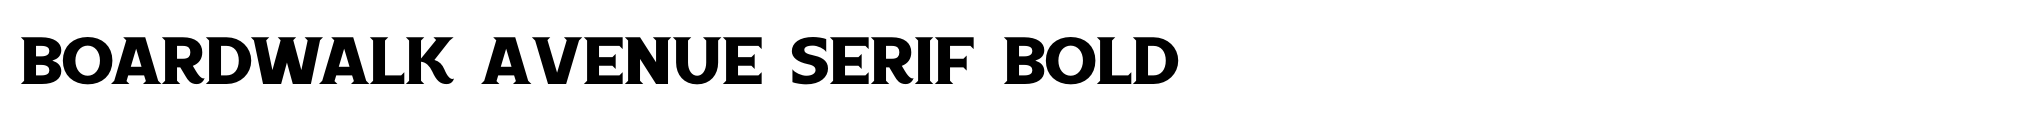 Boardwalk Avenue Serif Bold image